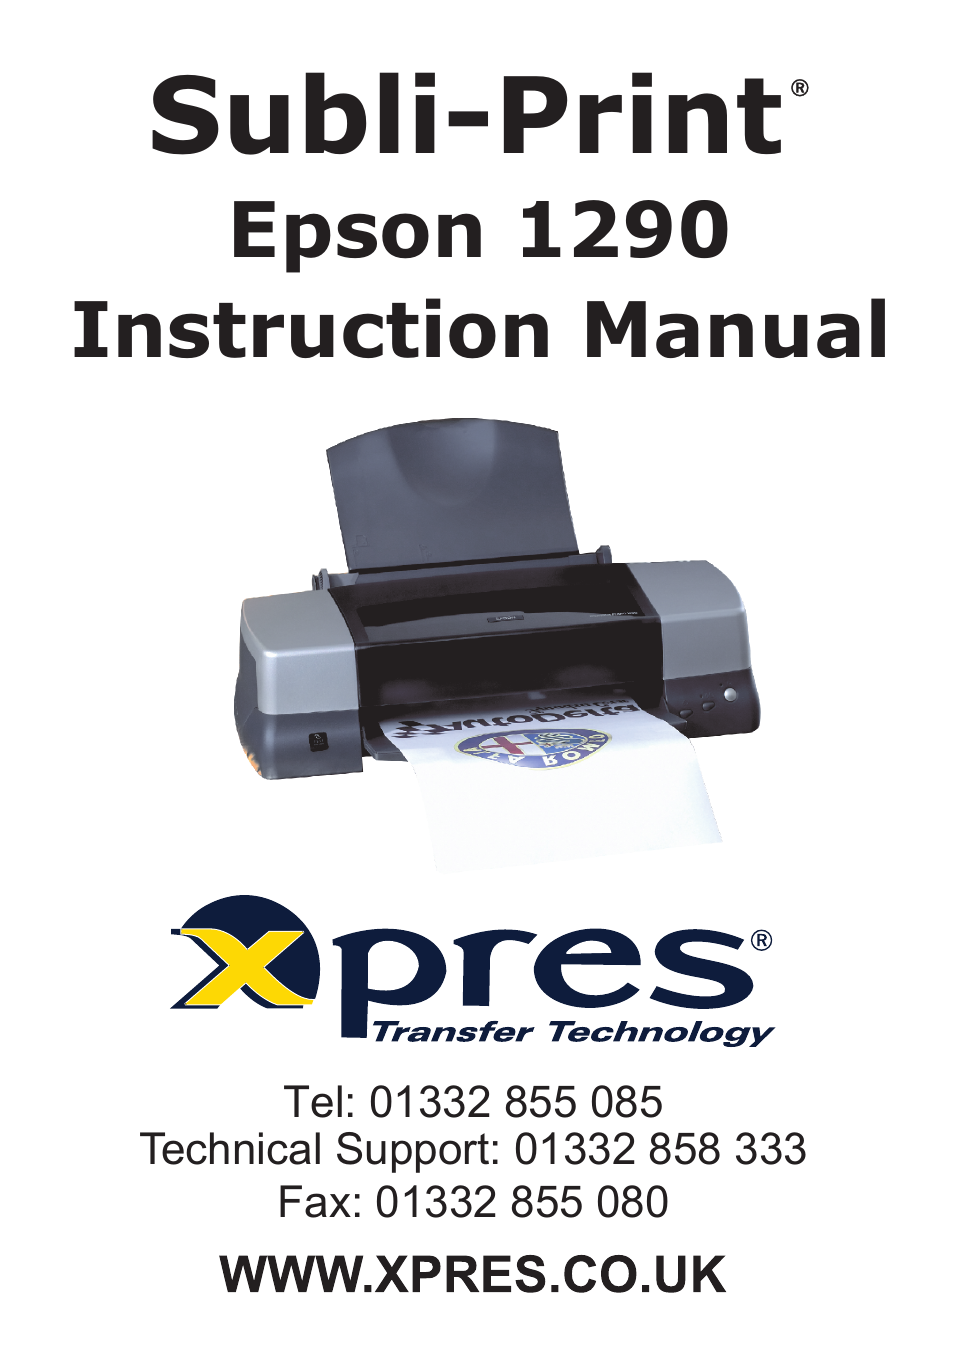 Subli-Print Epson 1290: Manual